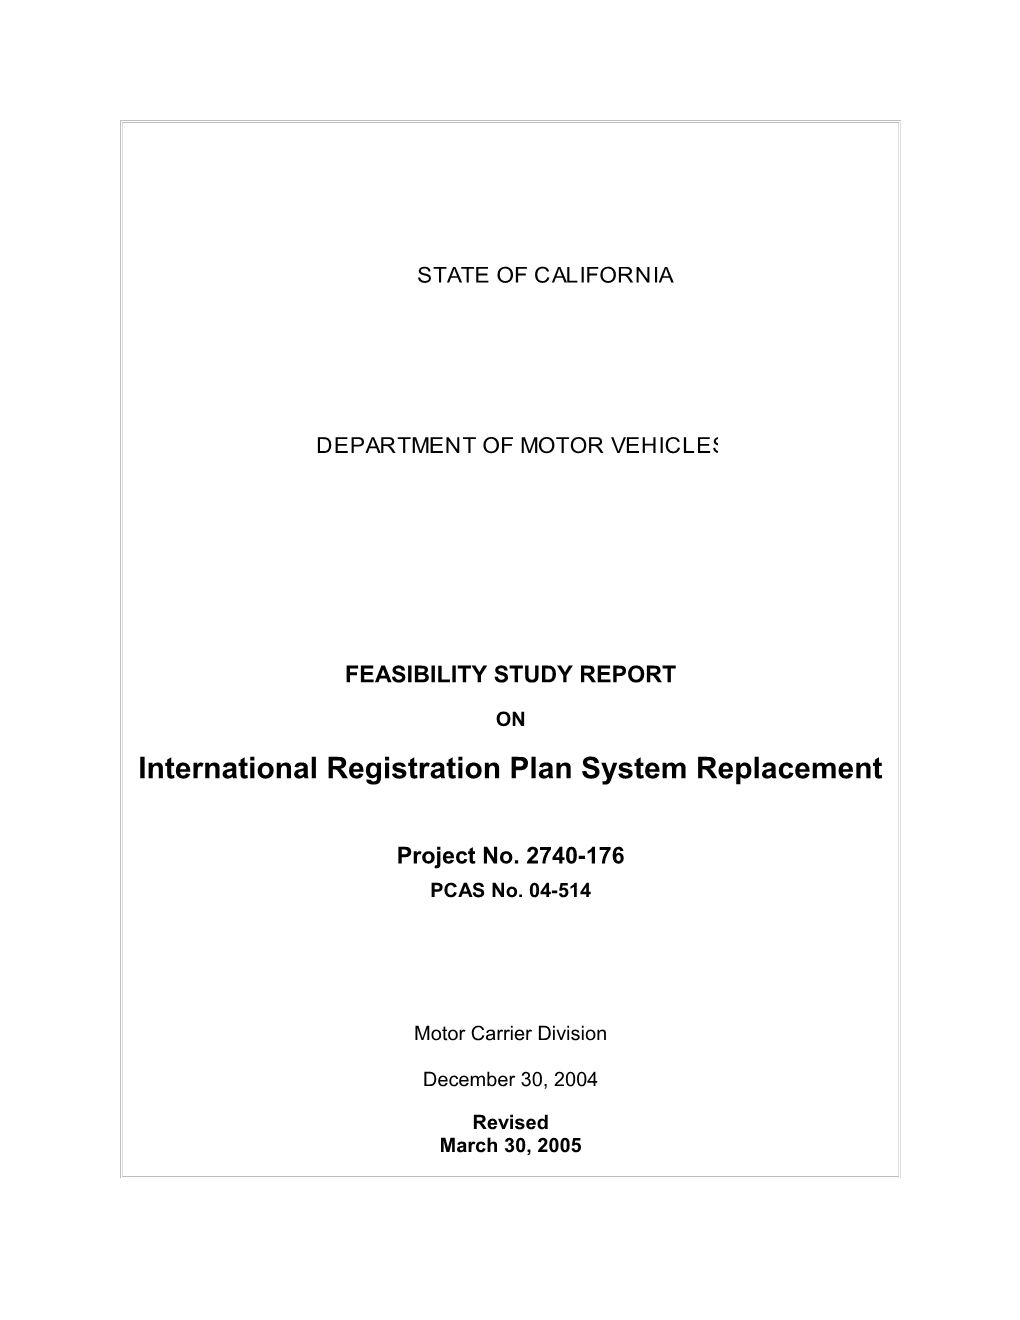 International Registration Plan System Replacement